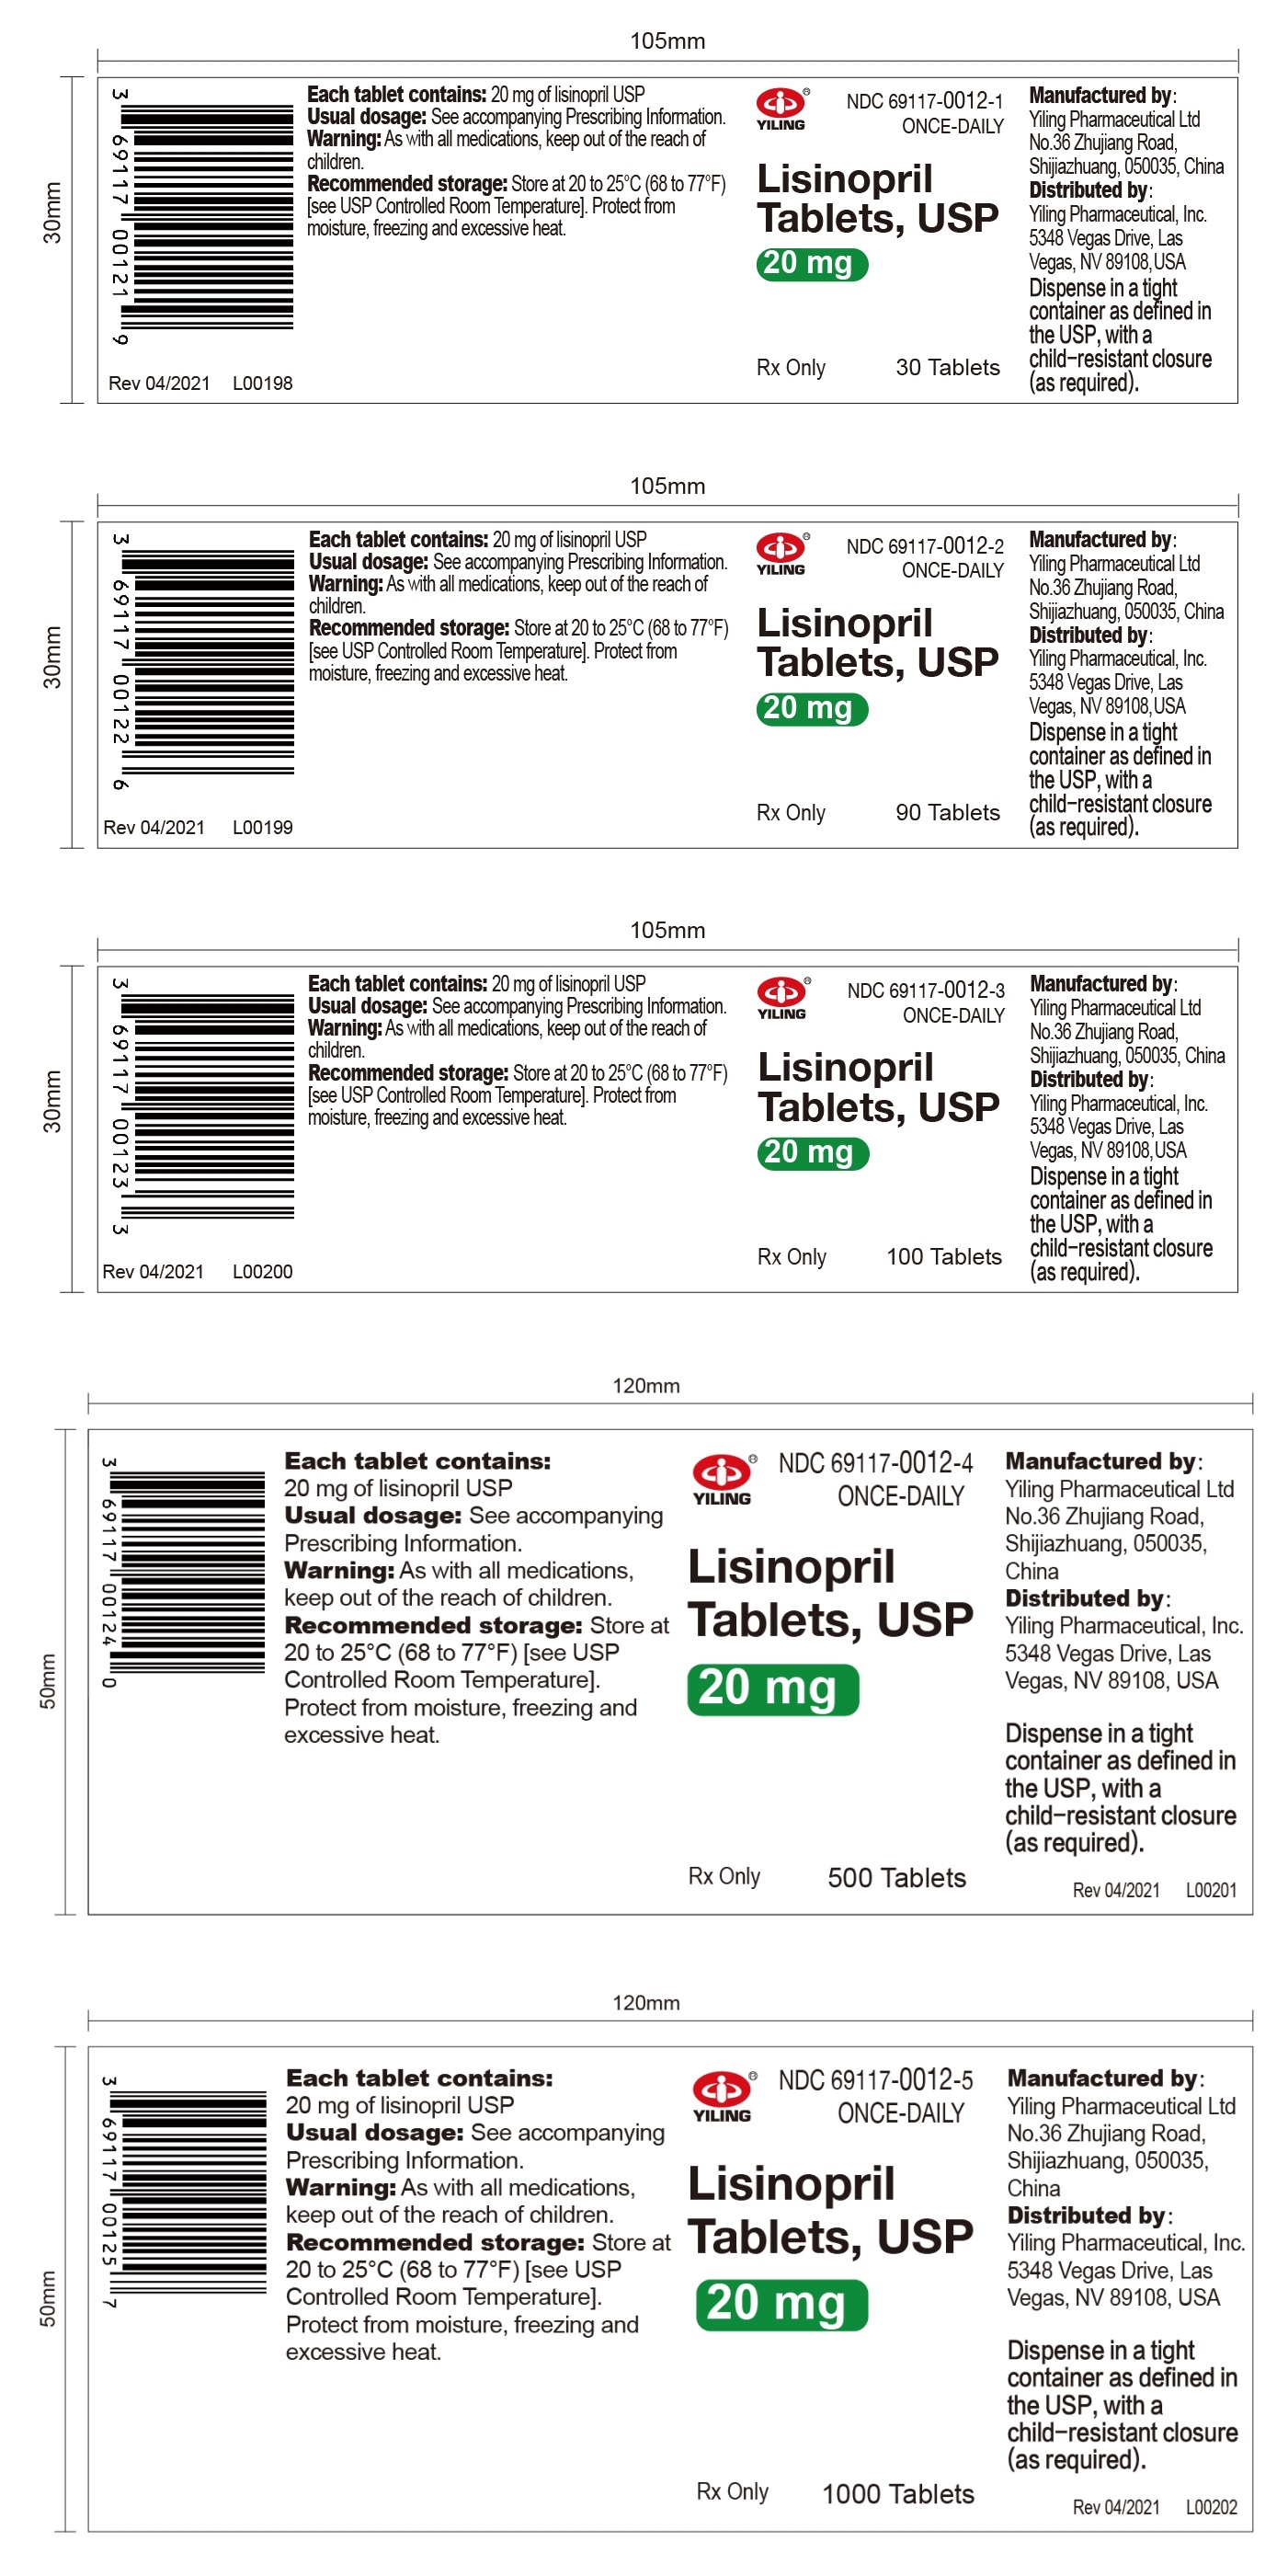 lisinopril-label-20mg